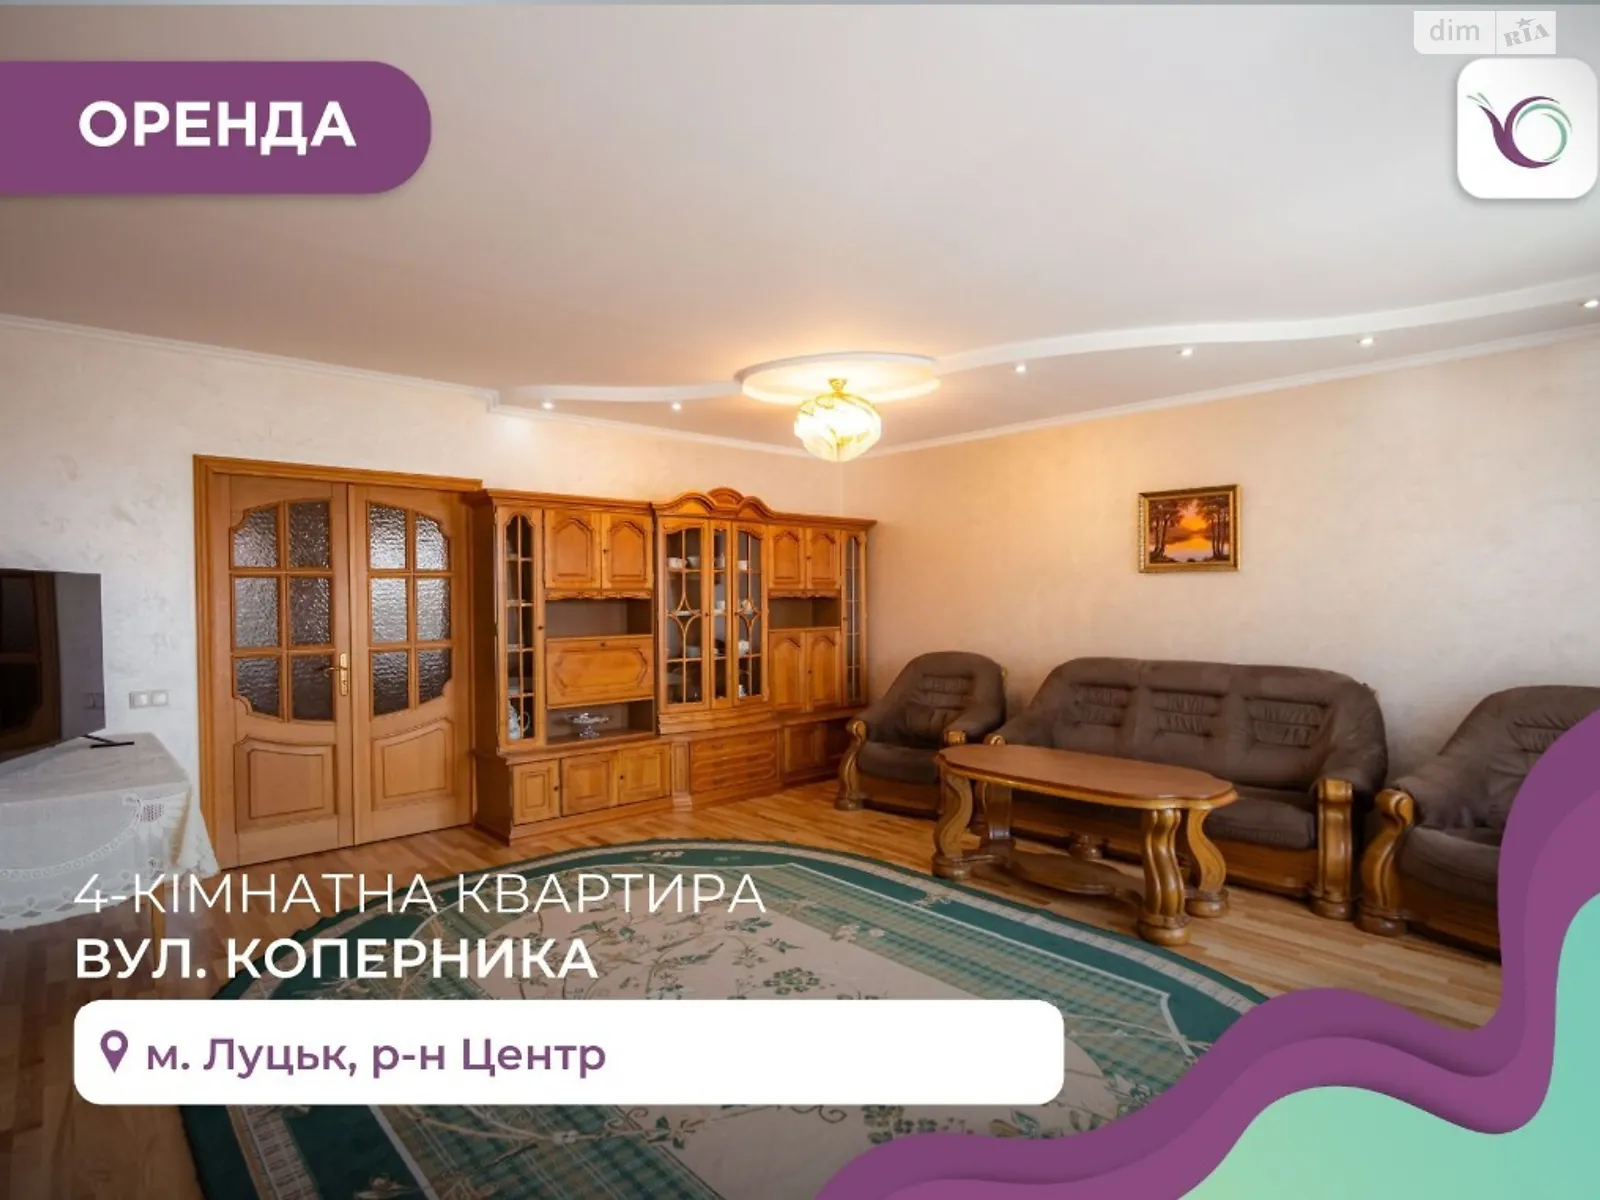 4-кімнатна квартира 140 кв. м у Луцьку